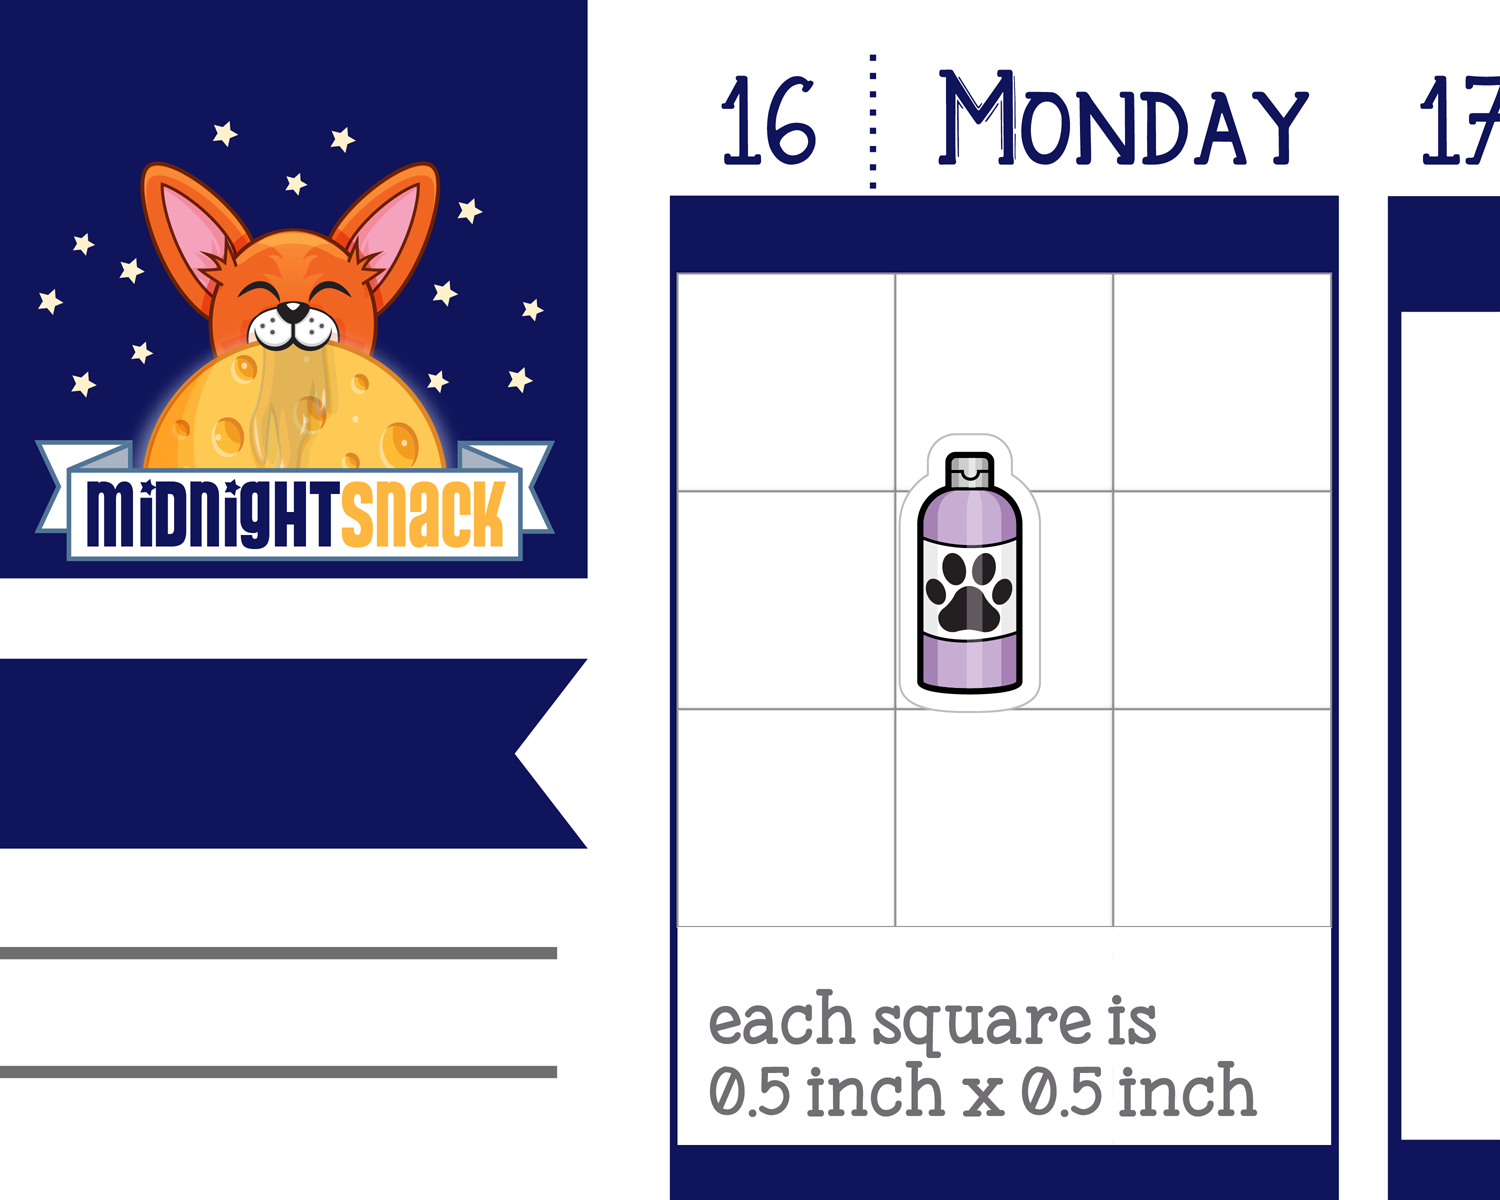 Pet Shampoo Icon: Pet Care Planner Stickers